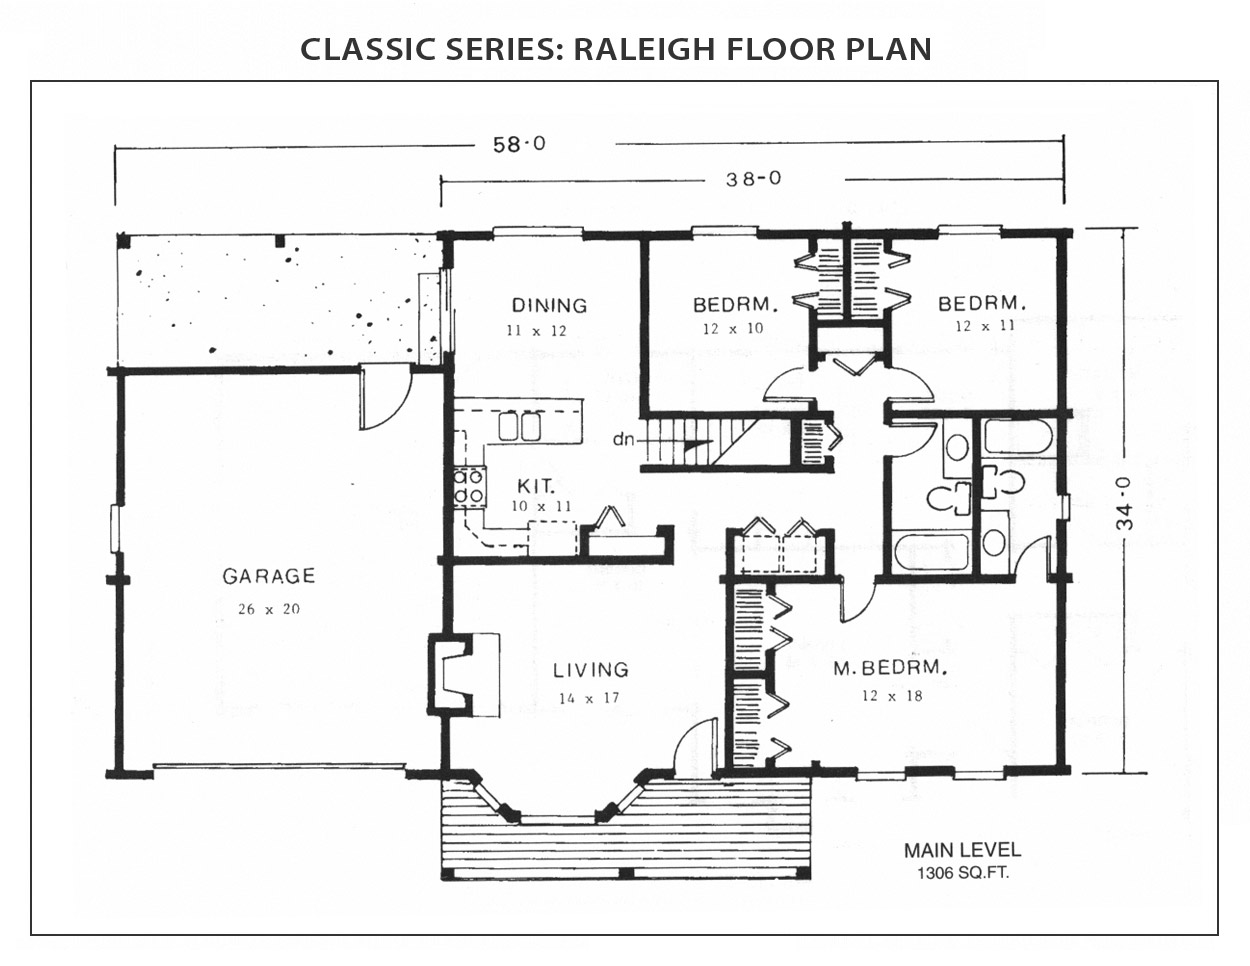 Raleigh Floor Plan Classic Series IHC